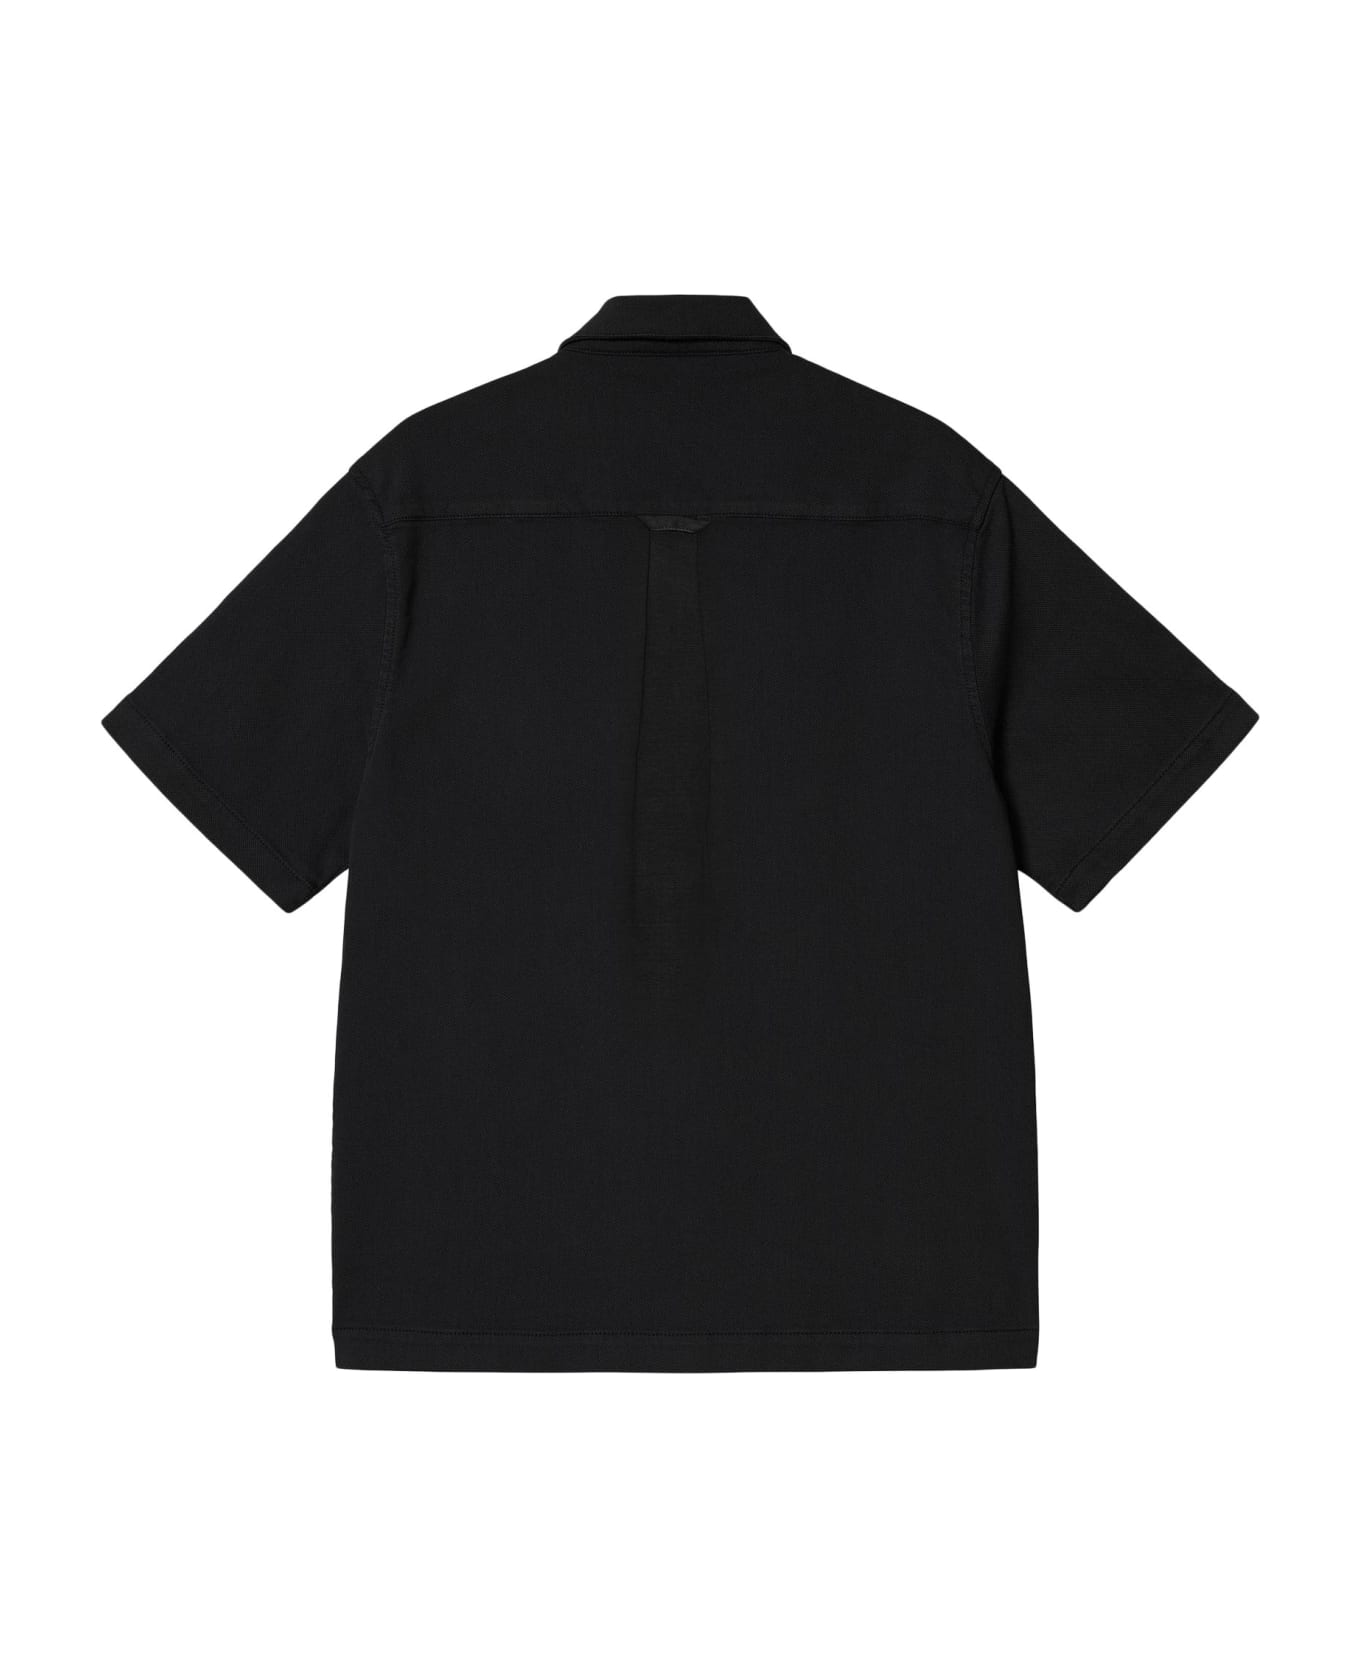 Carhartt Shirts Black - Black